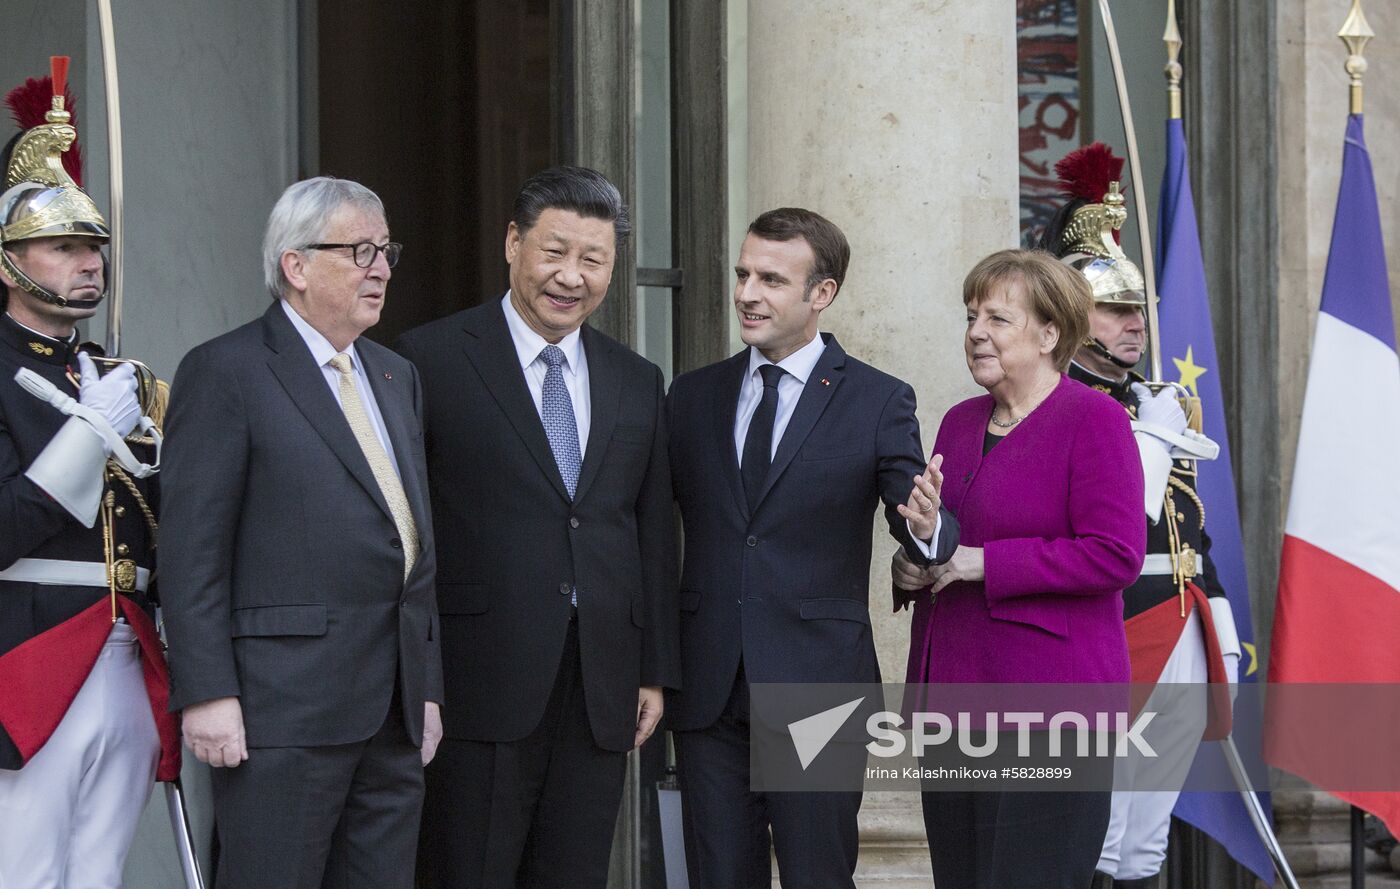 France EU China 